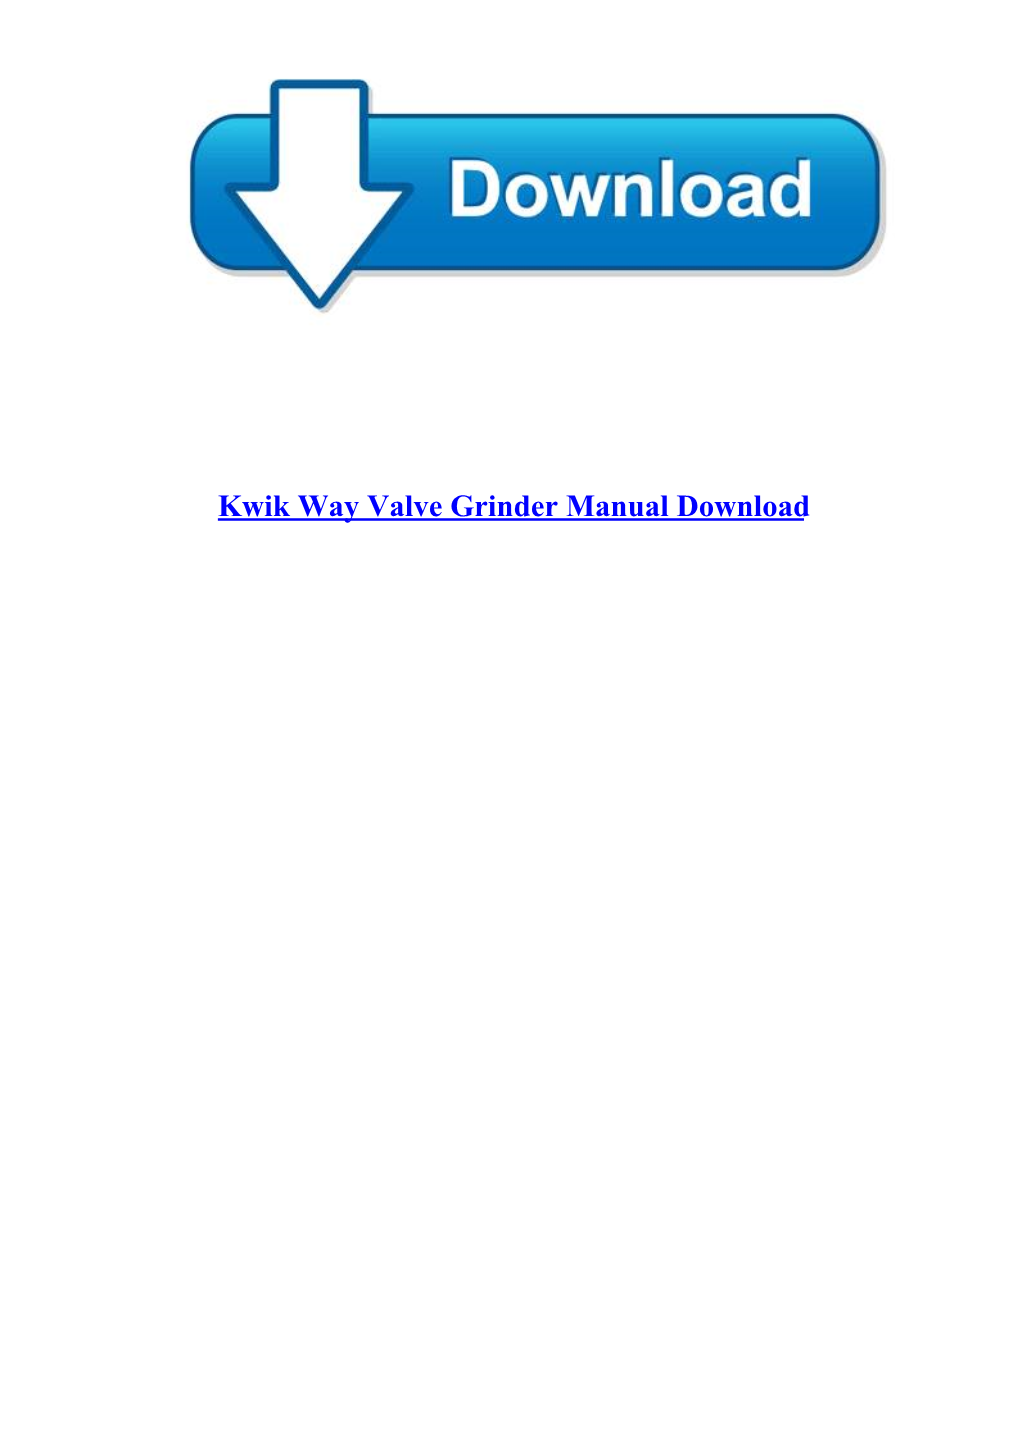 Kwik Way Valve Grinder Manual Download Kwik Way Valve Grinder Manual